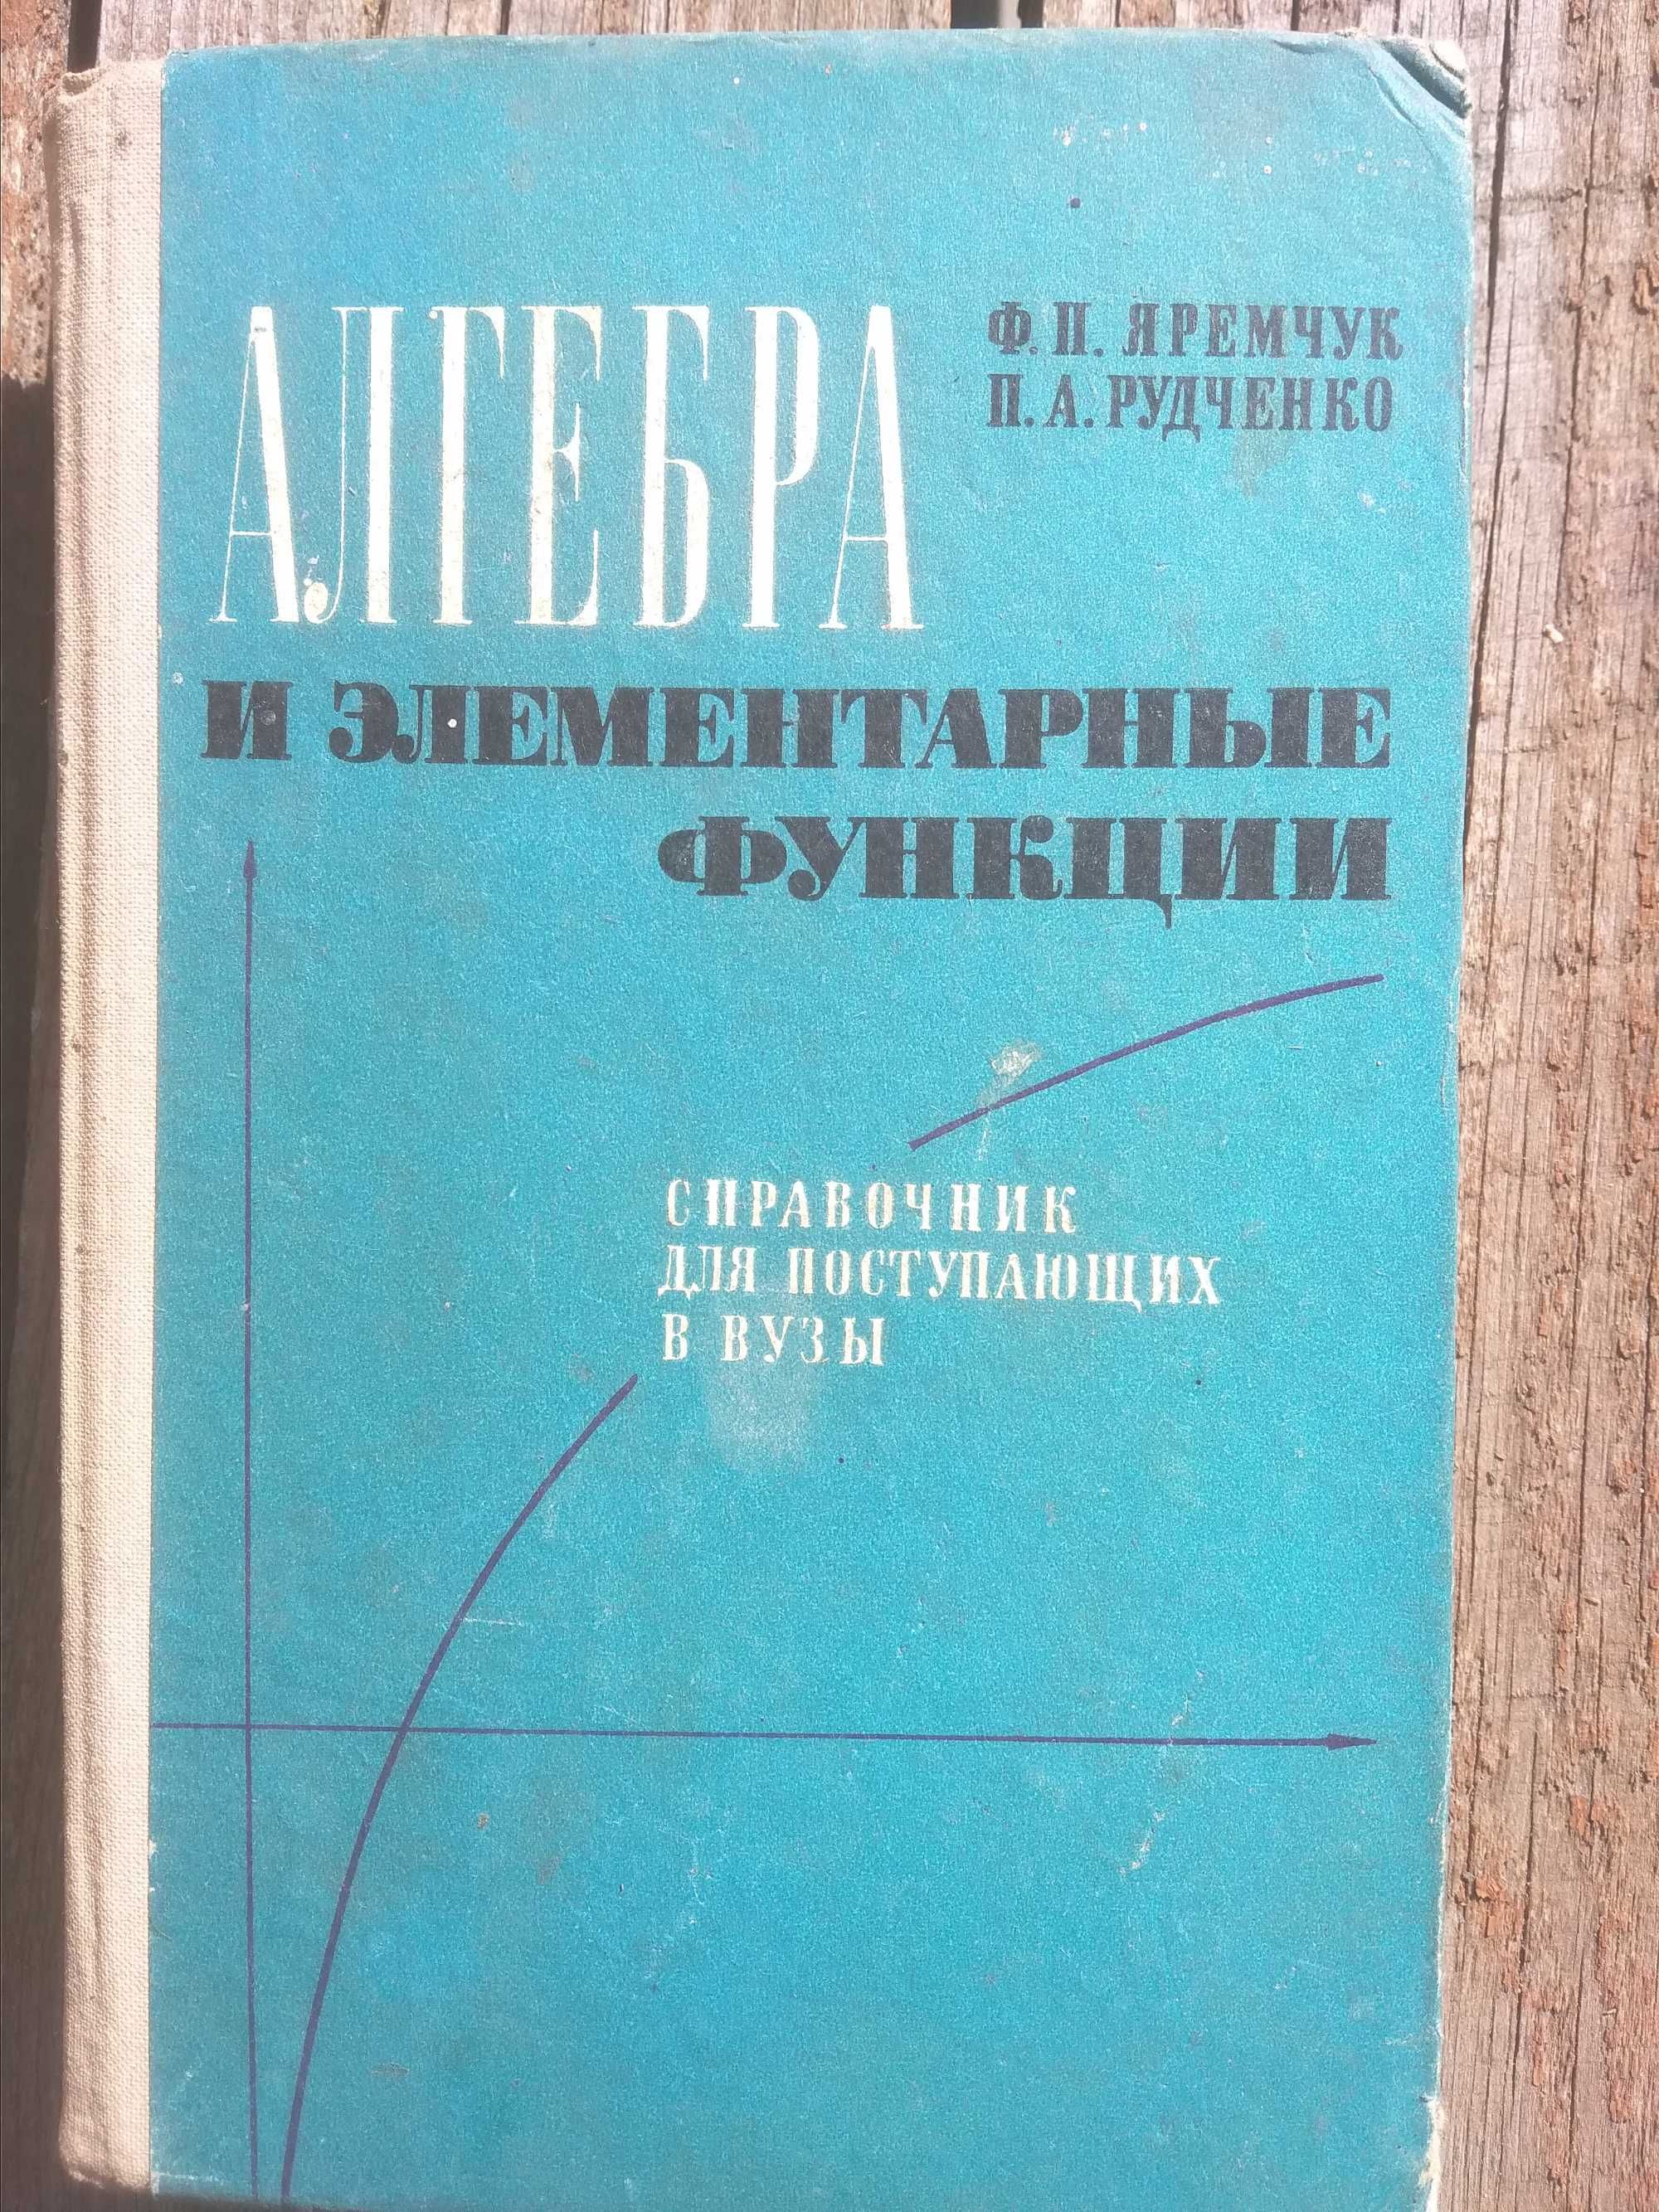 Учебники СССР по алгебре и математике